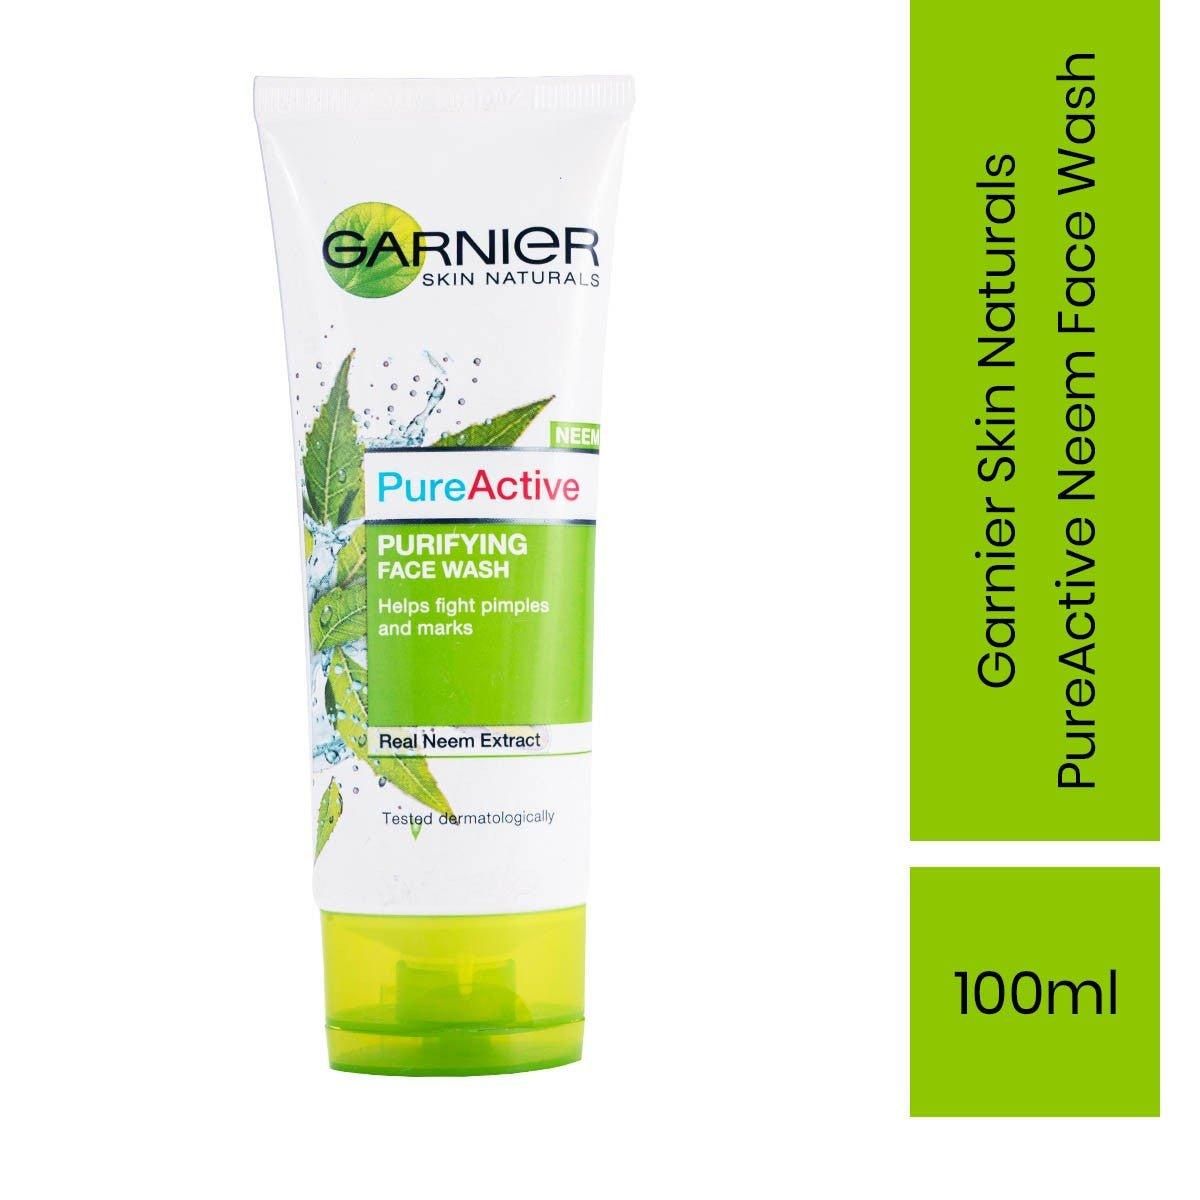 Garnier Skin Naturals Pure Active Neem Purifying Face Wash 100g